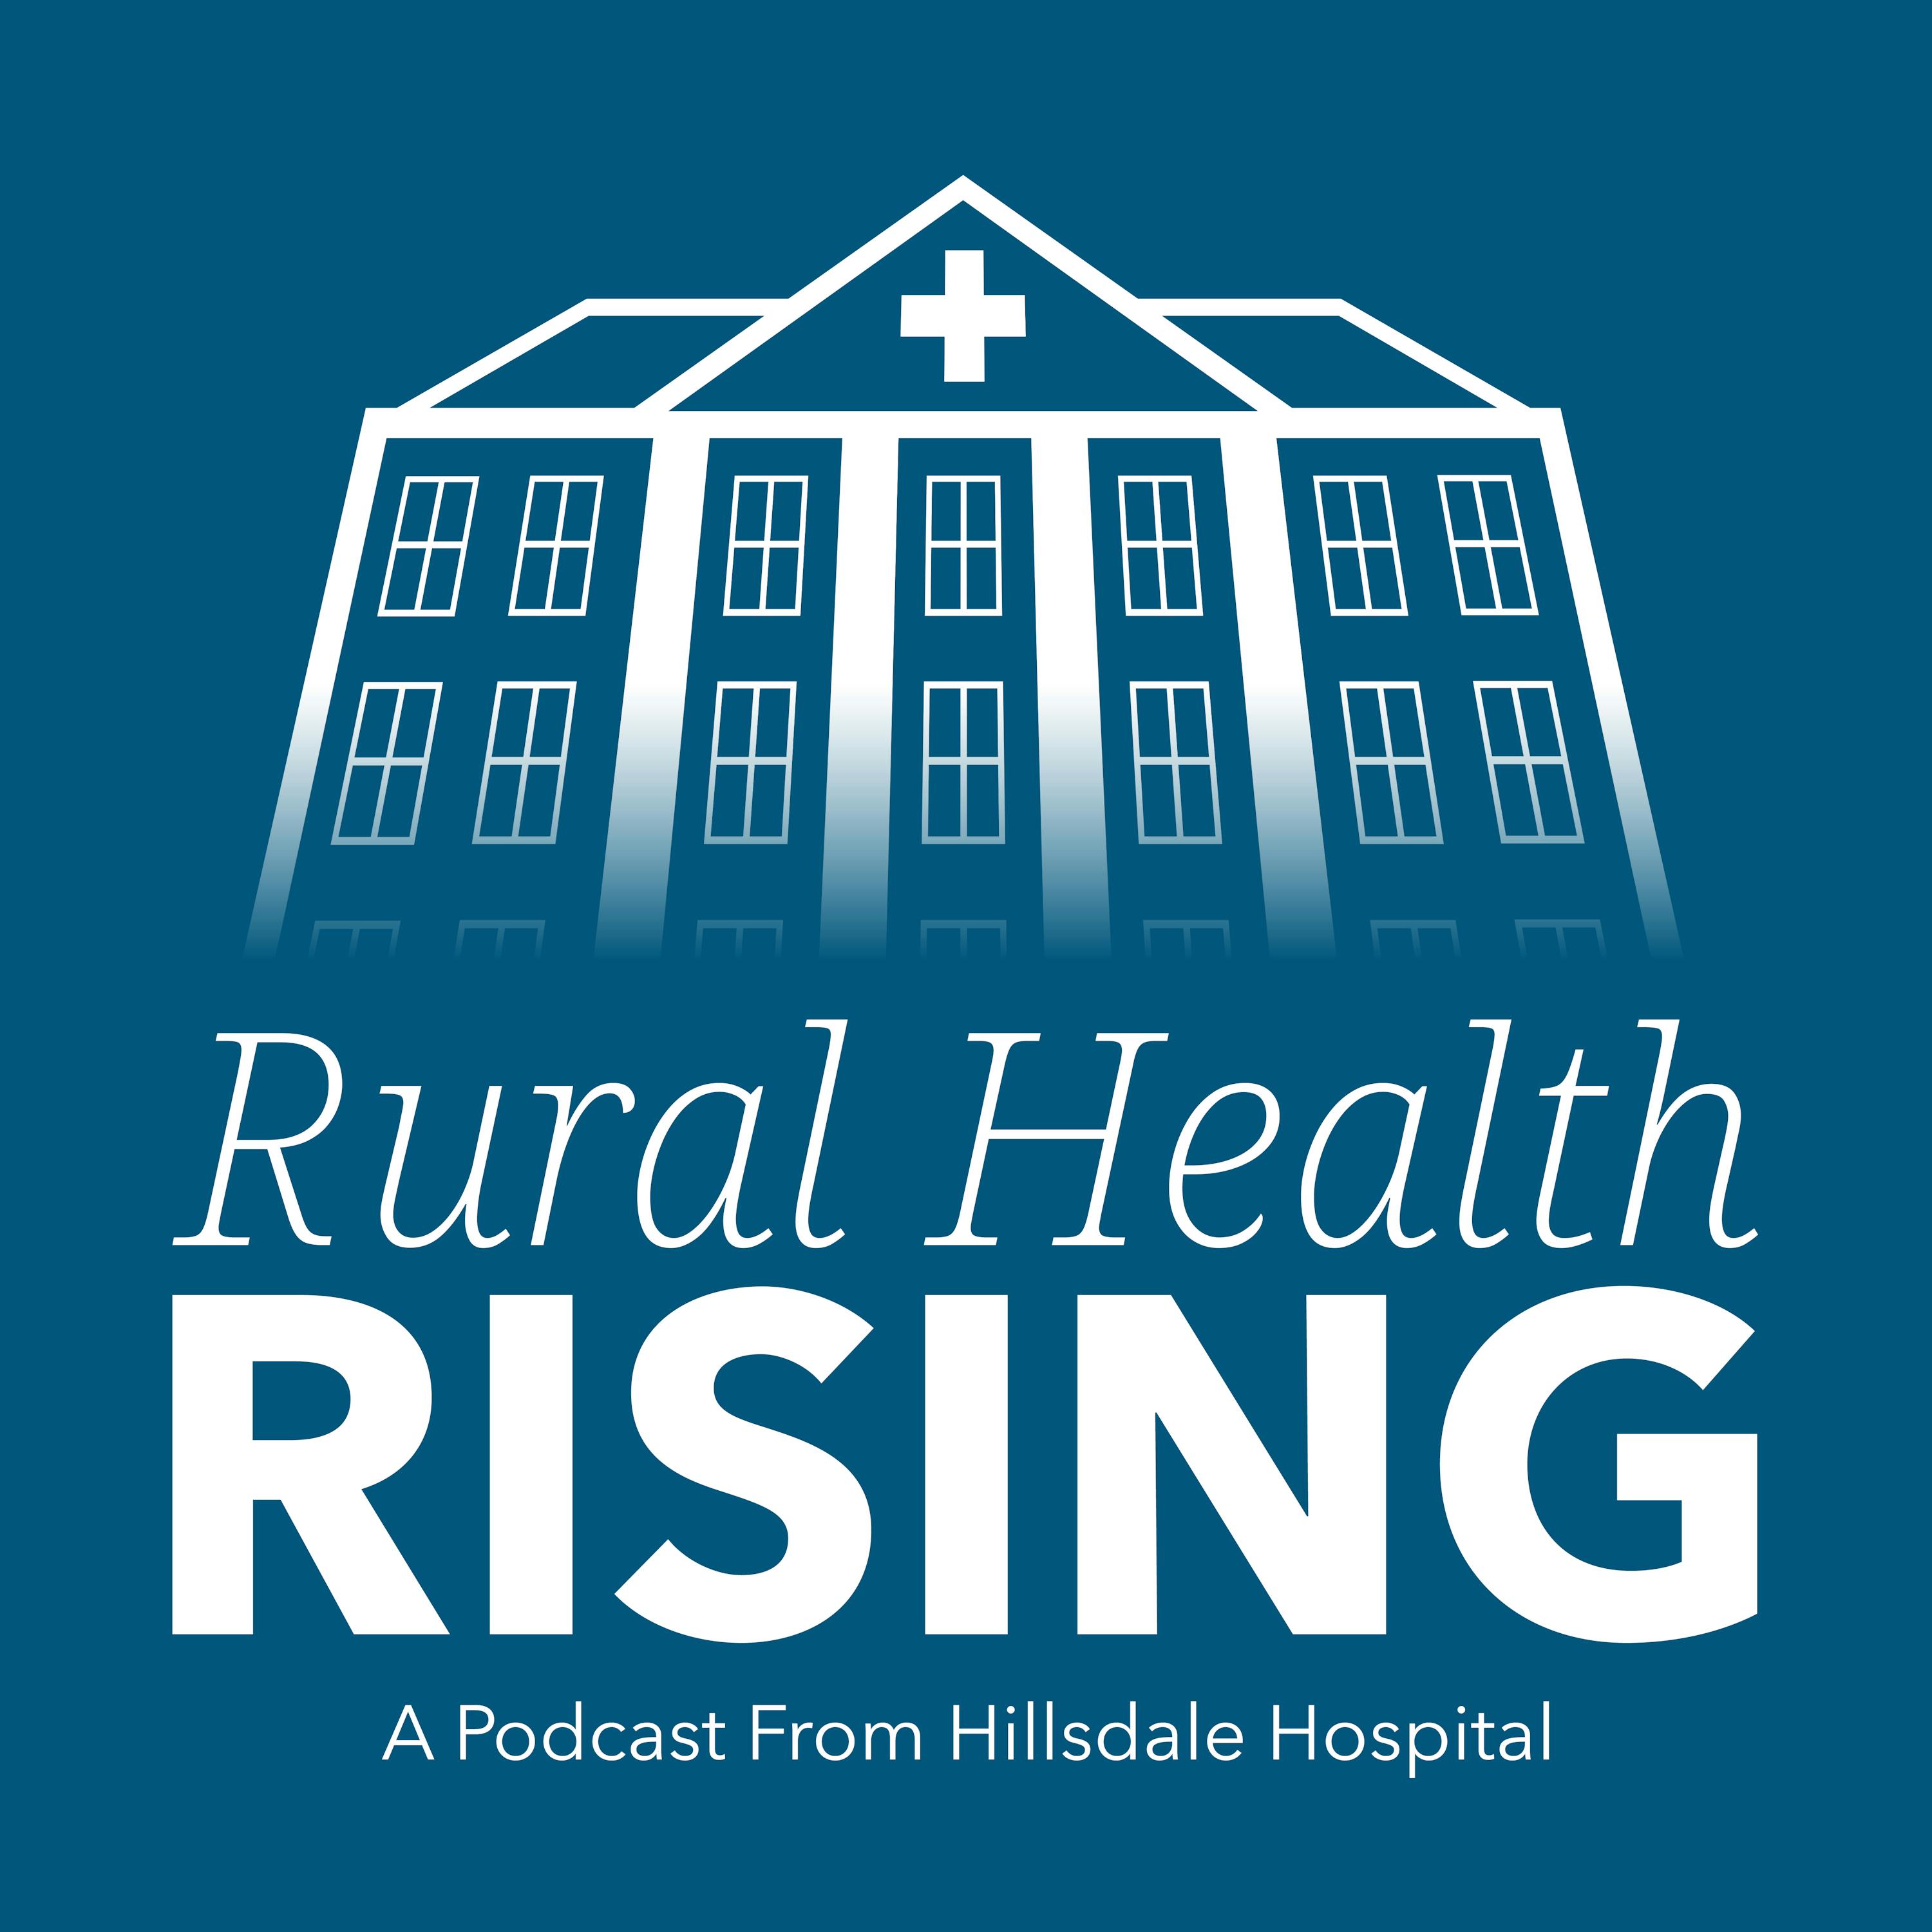 Episode 64: Access to Prenatal Care in Rural Communities